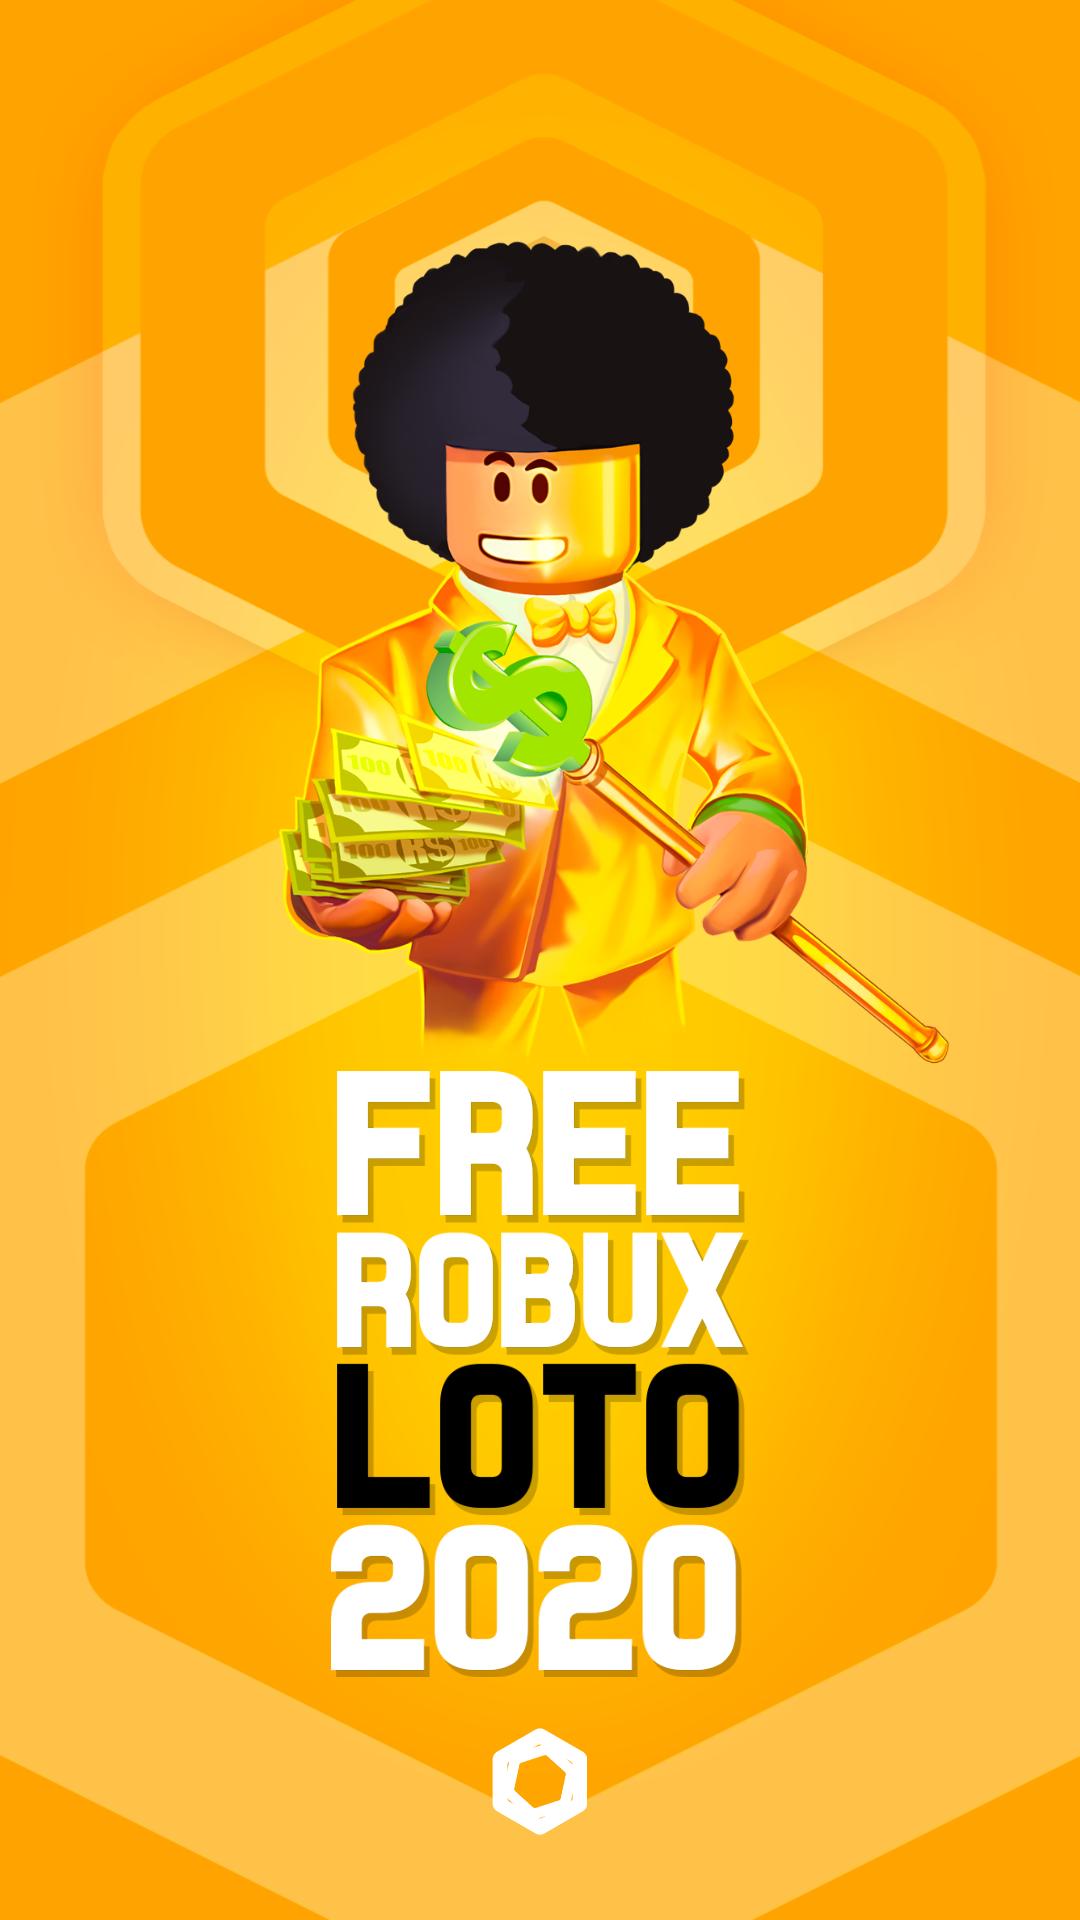 Free Robux Loto 2020 Mod Apk